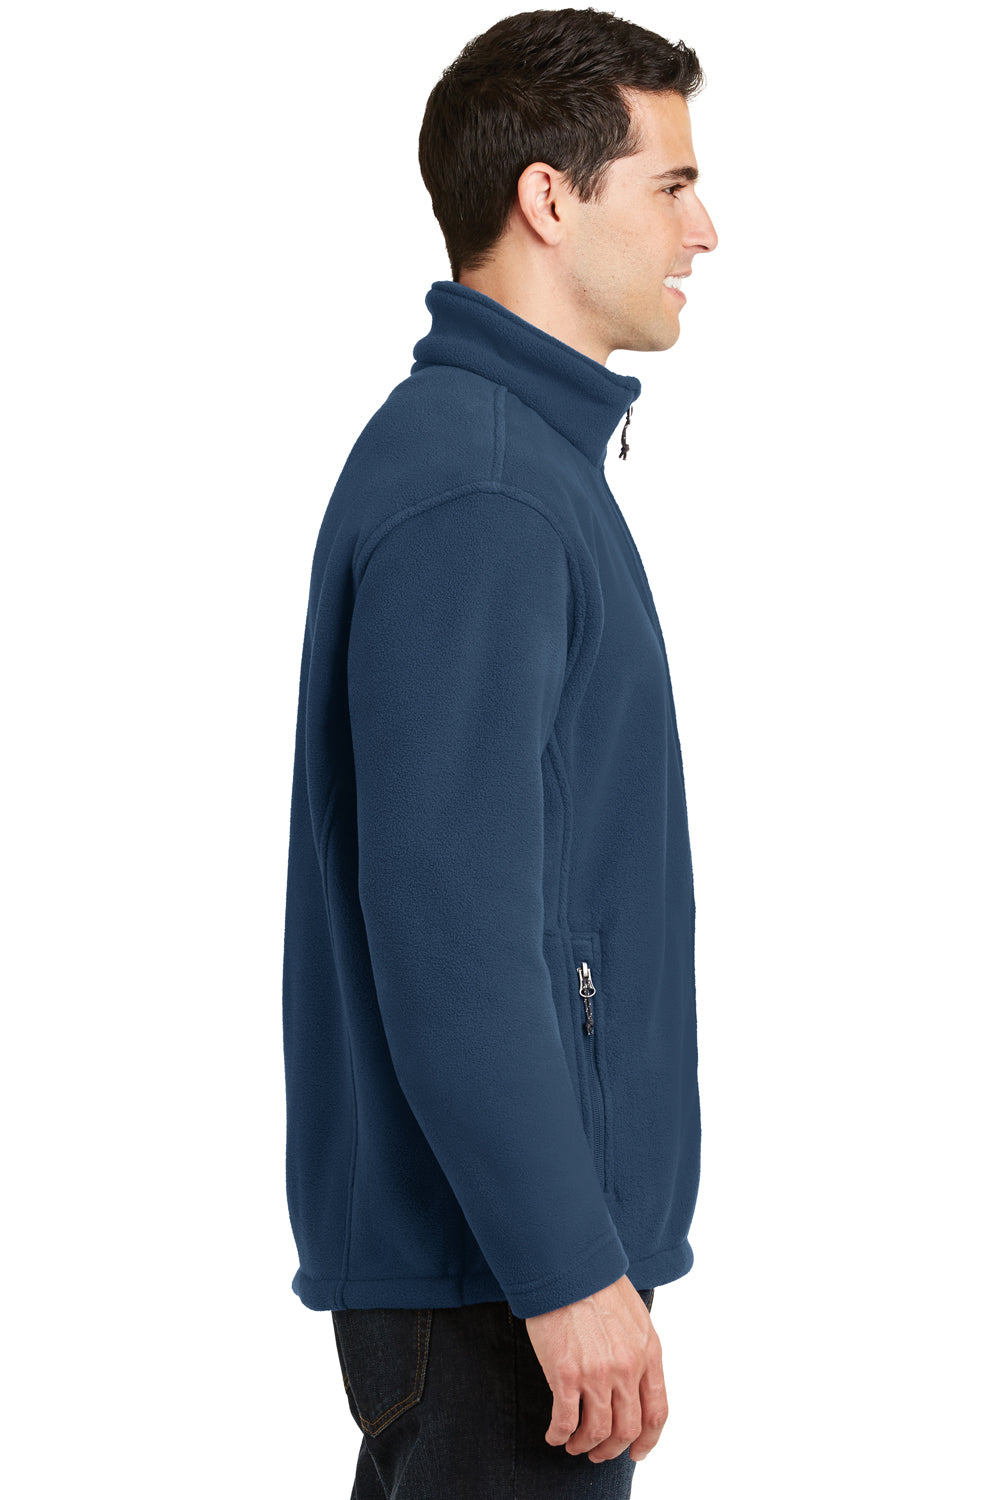 Port Authority F217 Mens Full Zip Fleece Jacket Insignia Blue Side